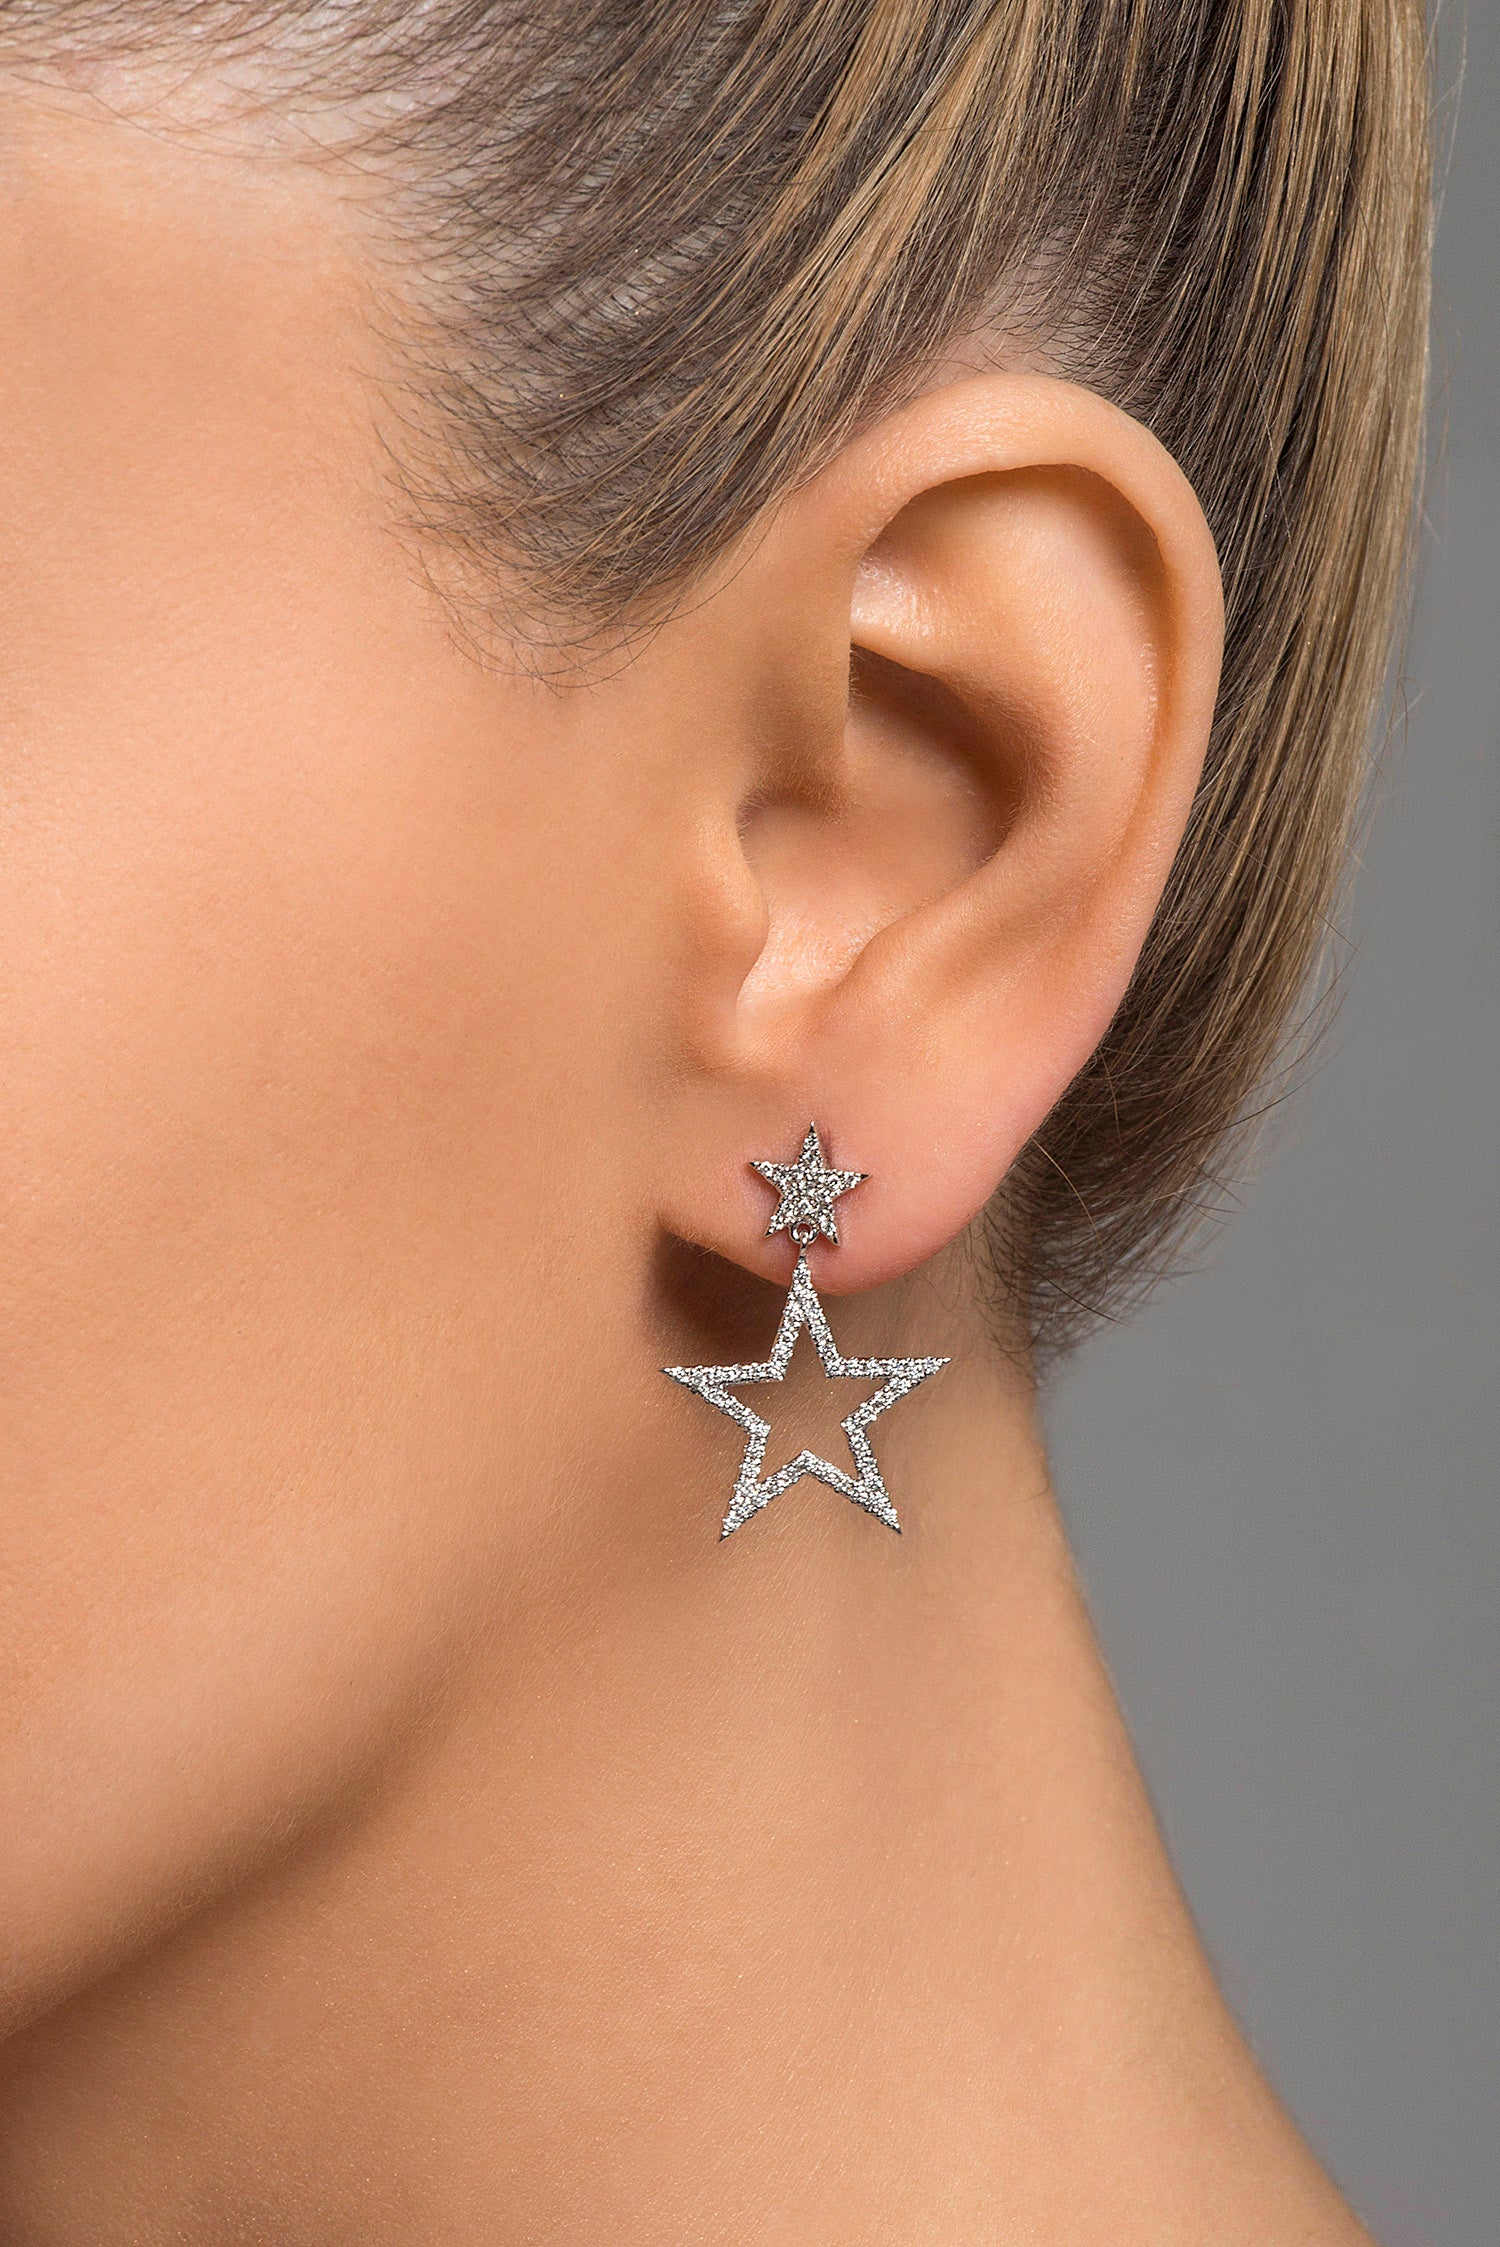 Bright Star Earrings